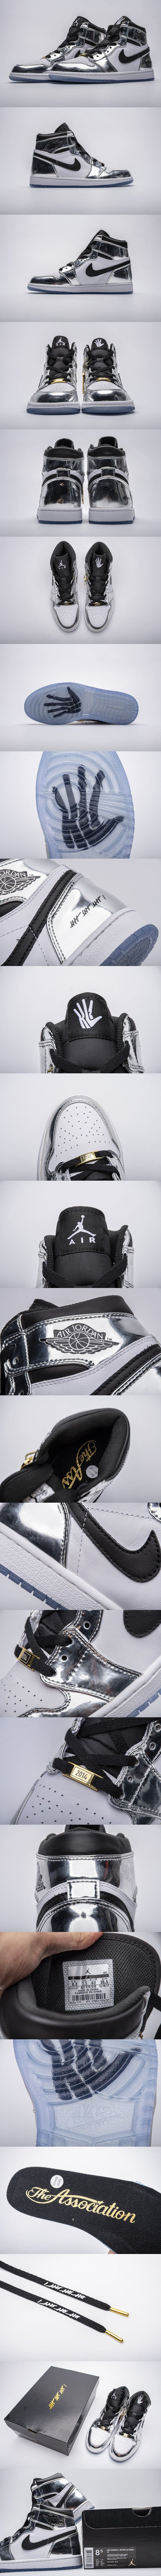 Nike Air Jordan 1 OG Hi Retro“Think 16 Kawhi Leonard” AQ7476-016 ナイキ エアジョーダン１ シンク16 カワイレナード